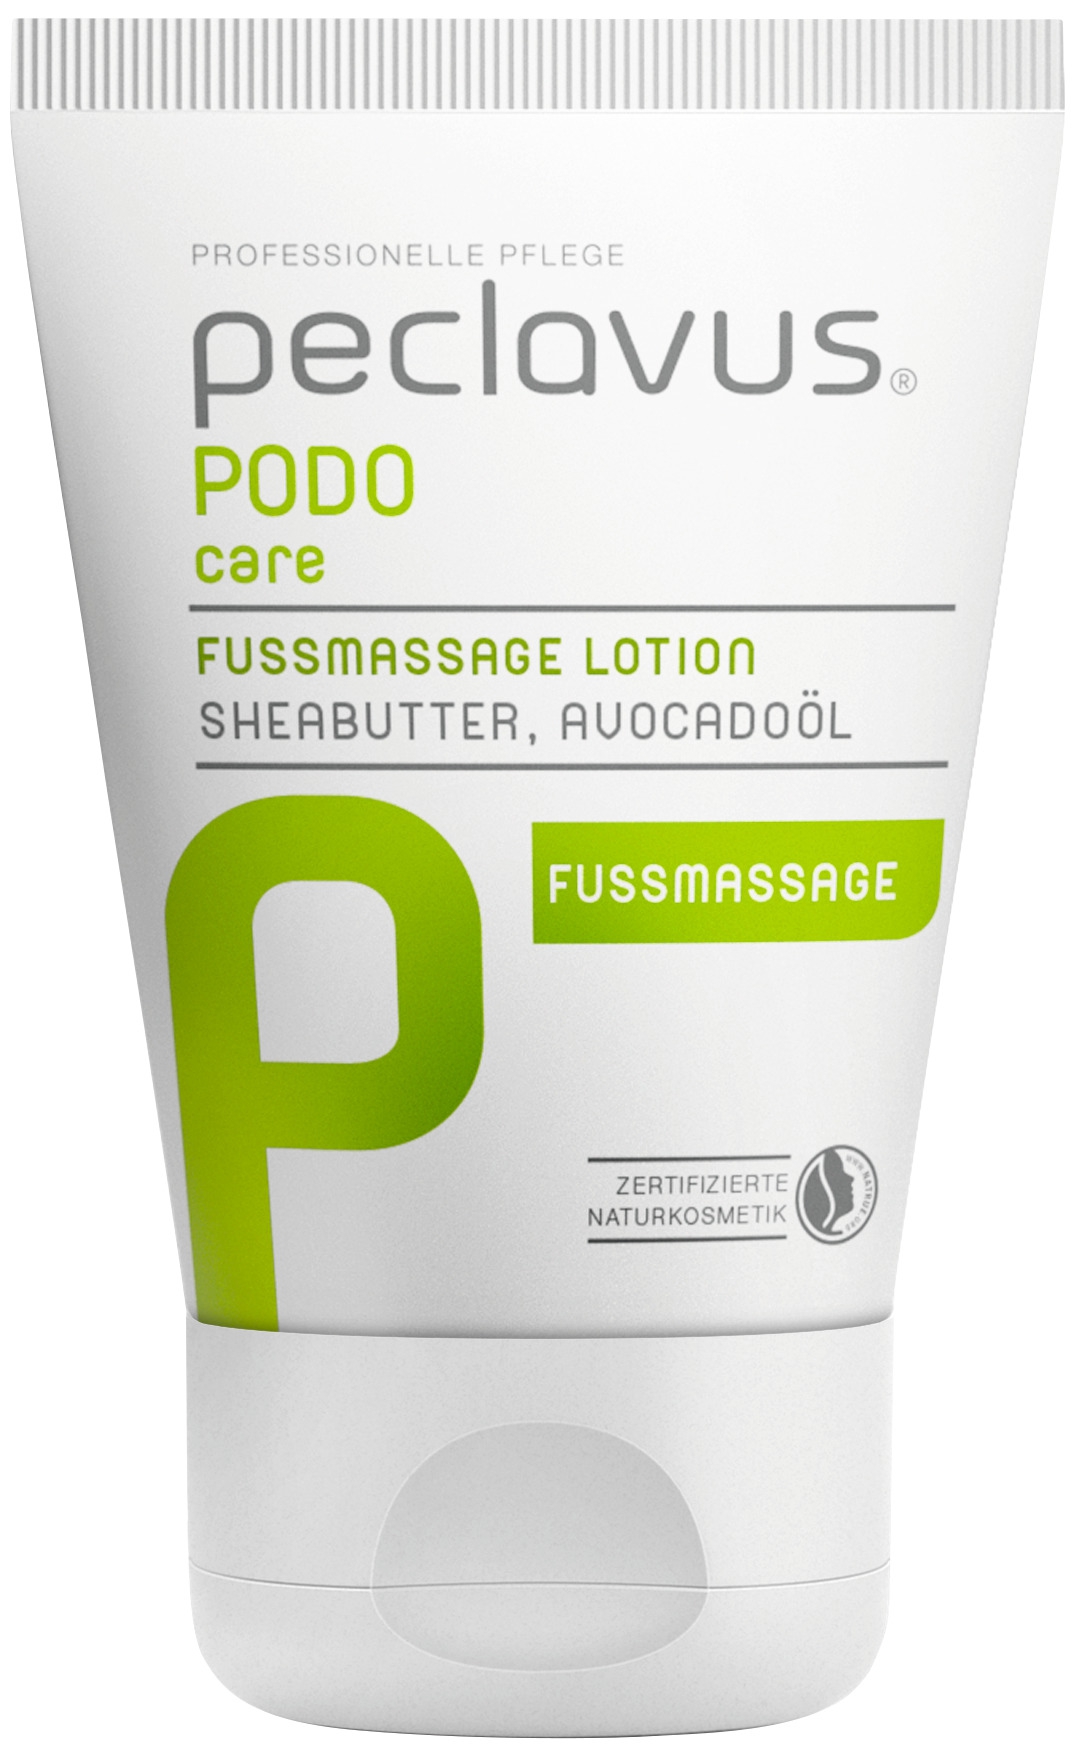 Peclavus PODOcare Fußmassage Lotion | 30 ml